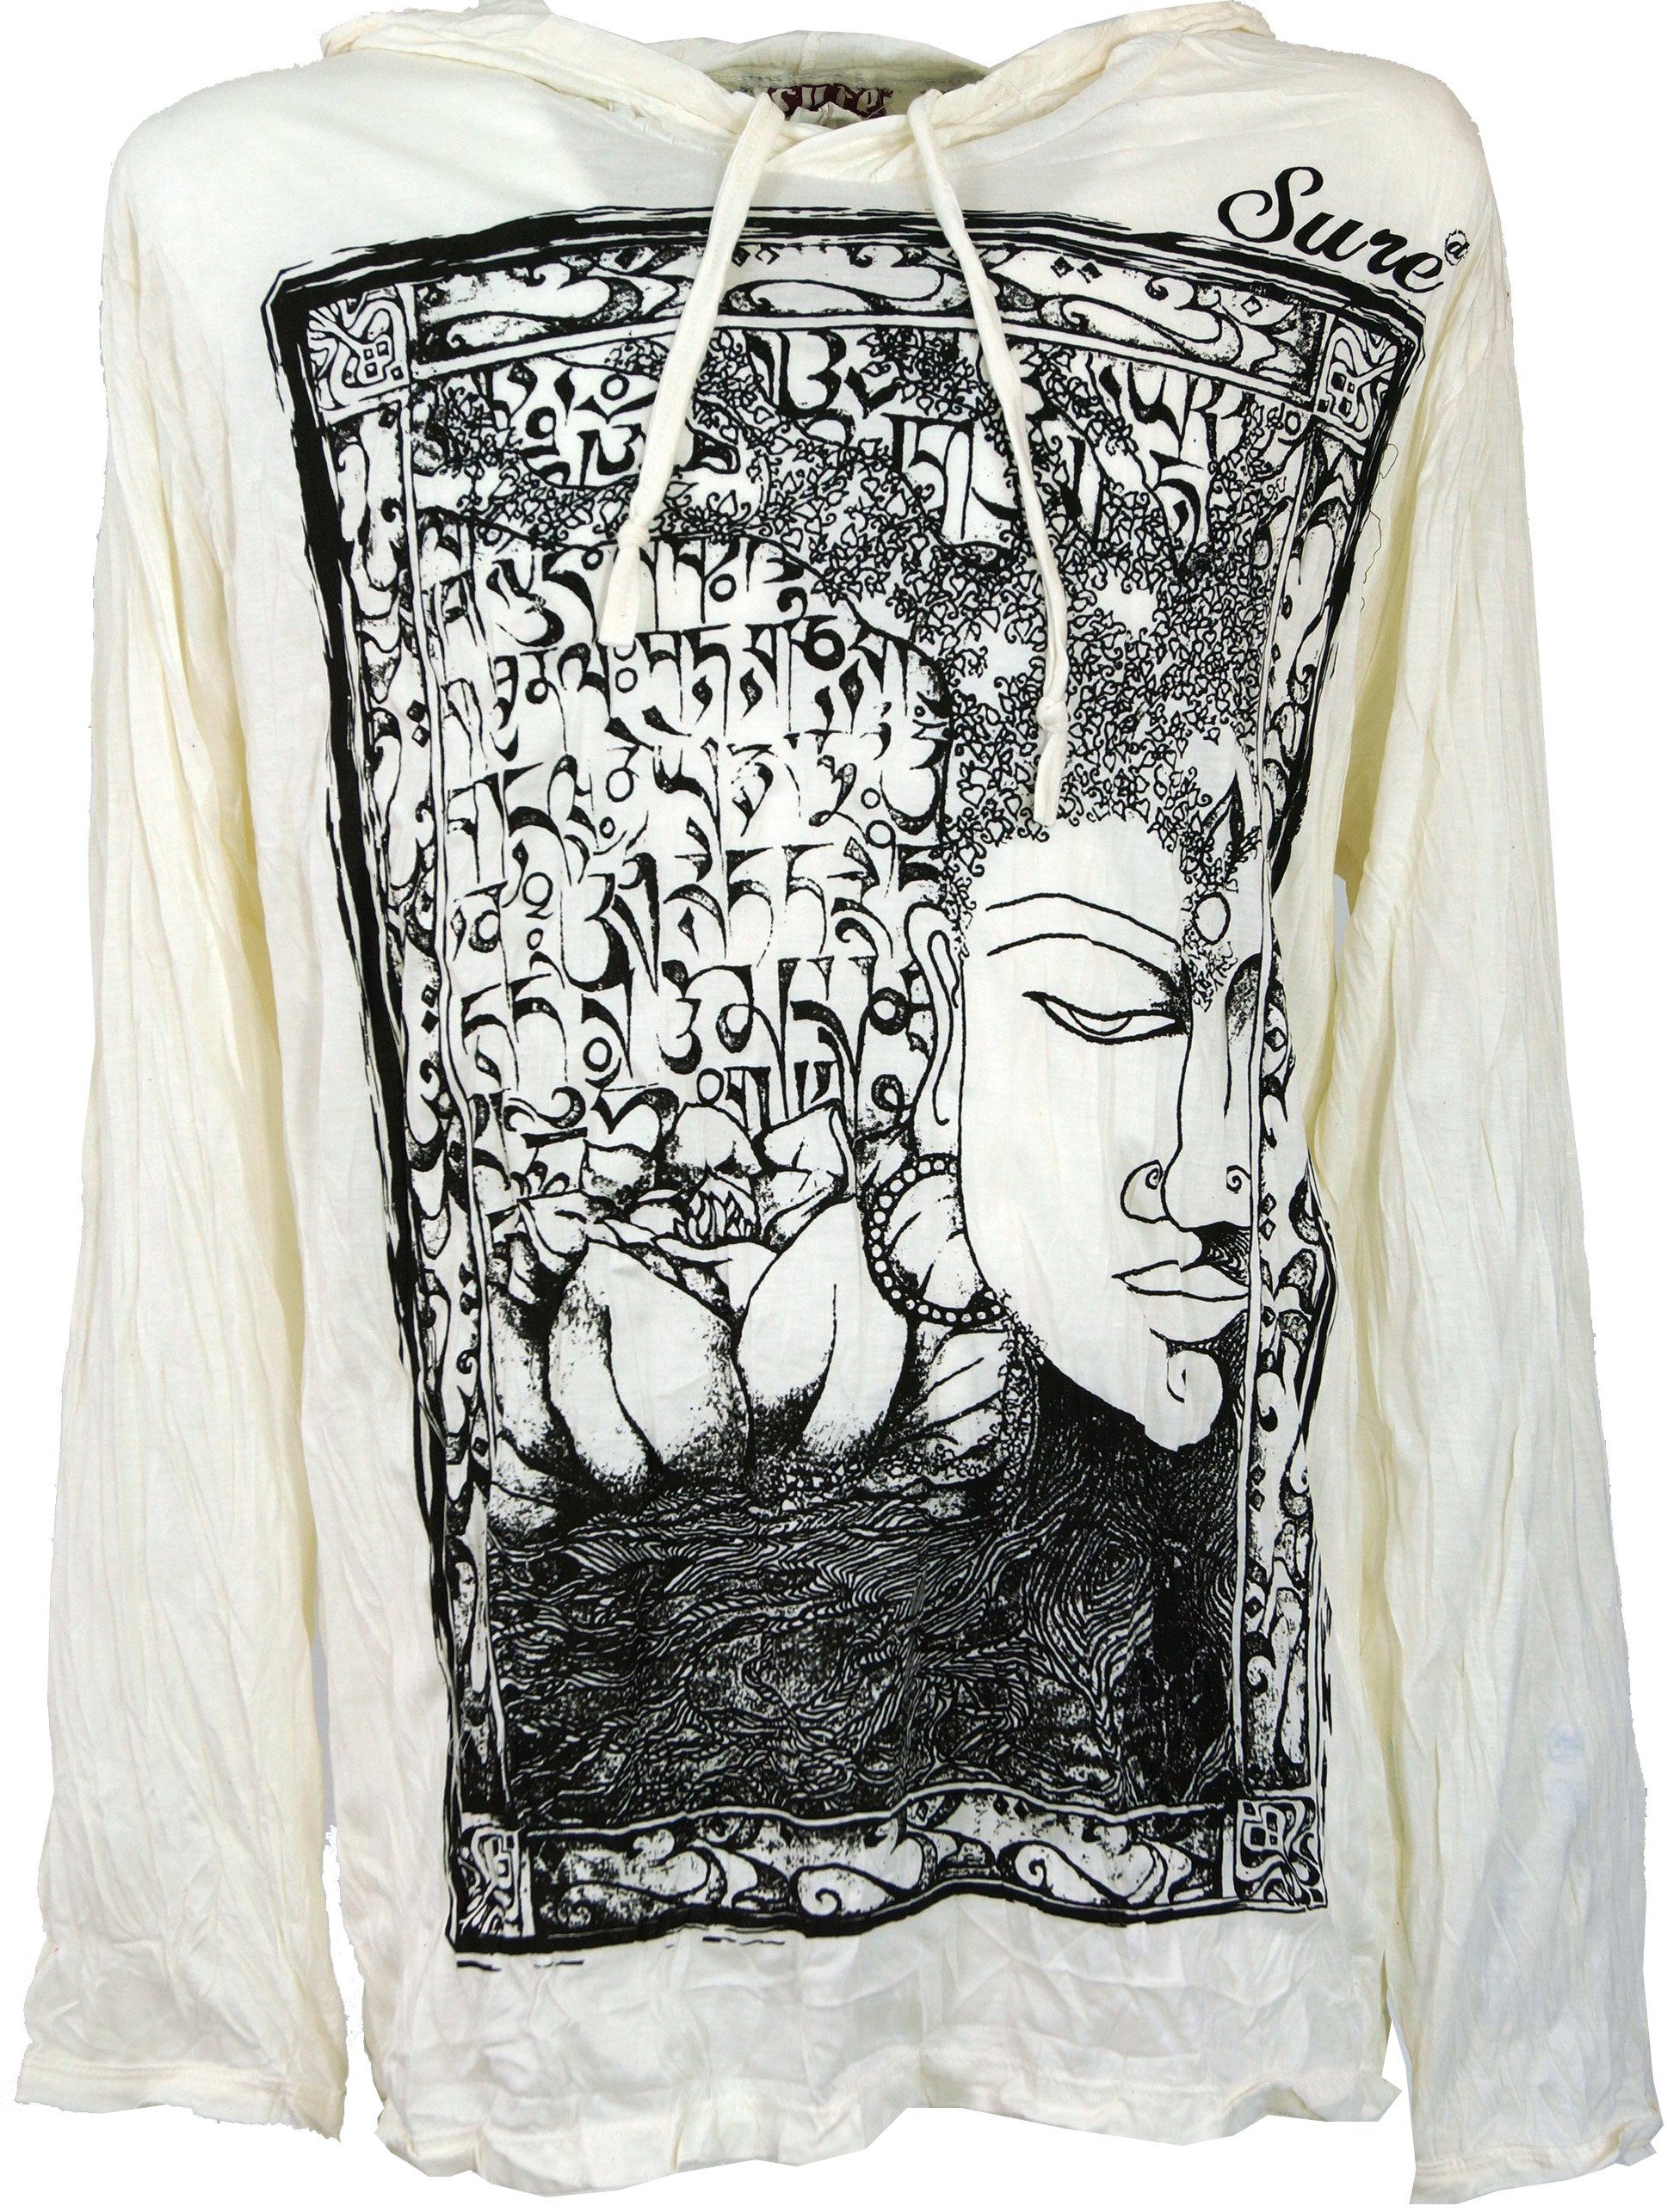 Guru-Shop T-Shirt Sure Langarmshirt, Kapuzenshirt Mantra Buddha -.. Goa Style, Festival, alternative Bekleidung weiß | T-Shirts